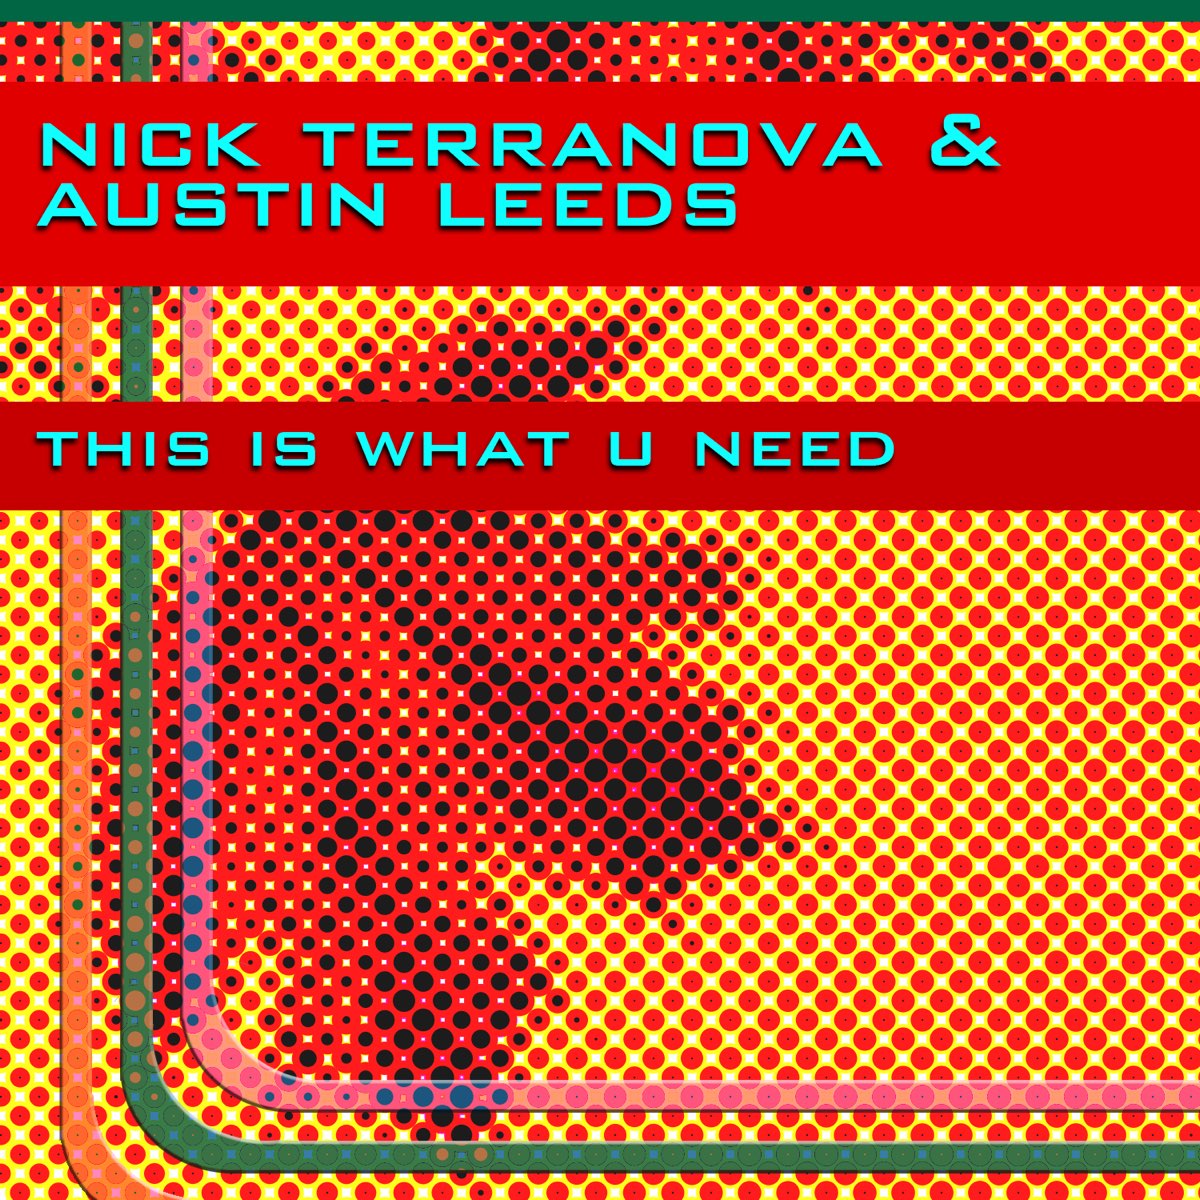 Nick Terranova. Jeff Bounce. Terra Nova - right Now Break away(1998).